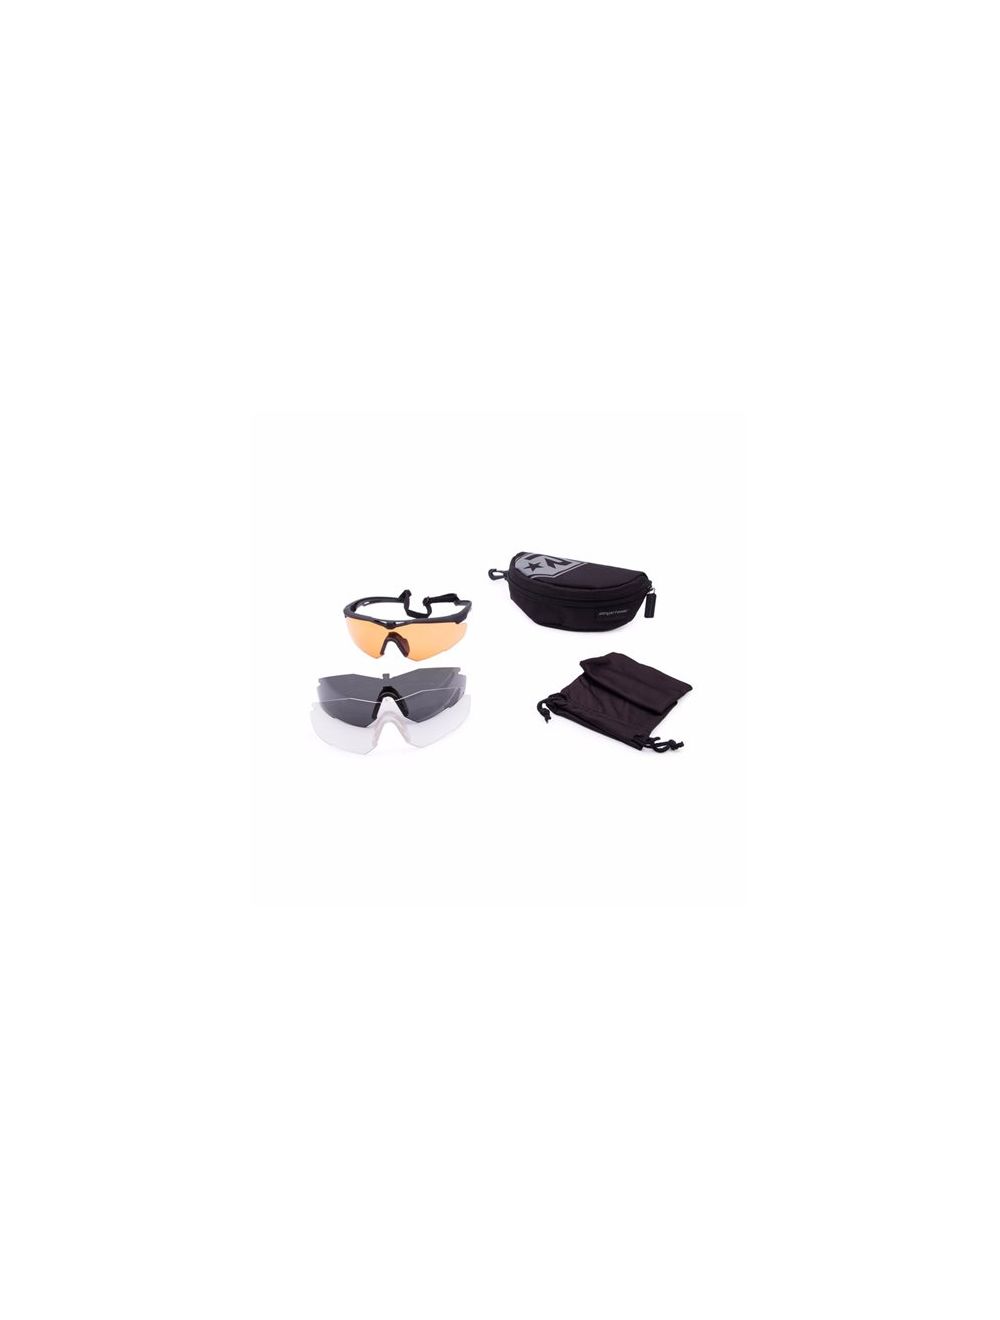 StingerHawk Eyewear Deluxe Shooters Kit